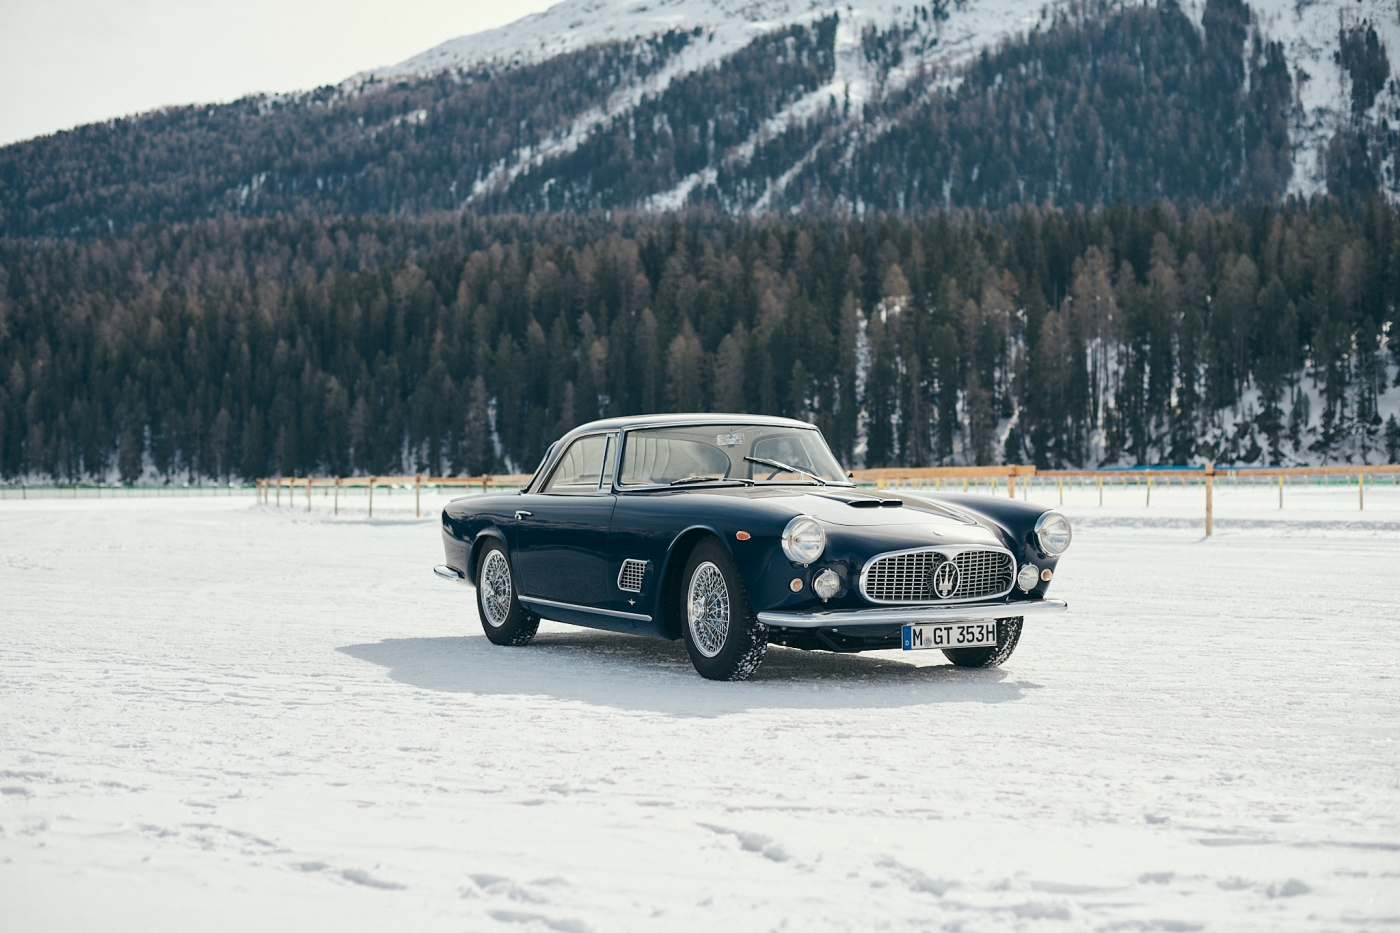  Maserati 3500 GT Vignale at THE ICE, St. Moritz car contest 2023